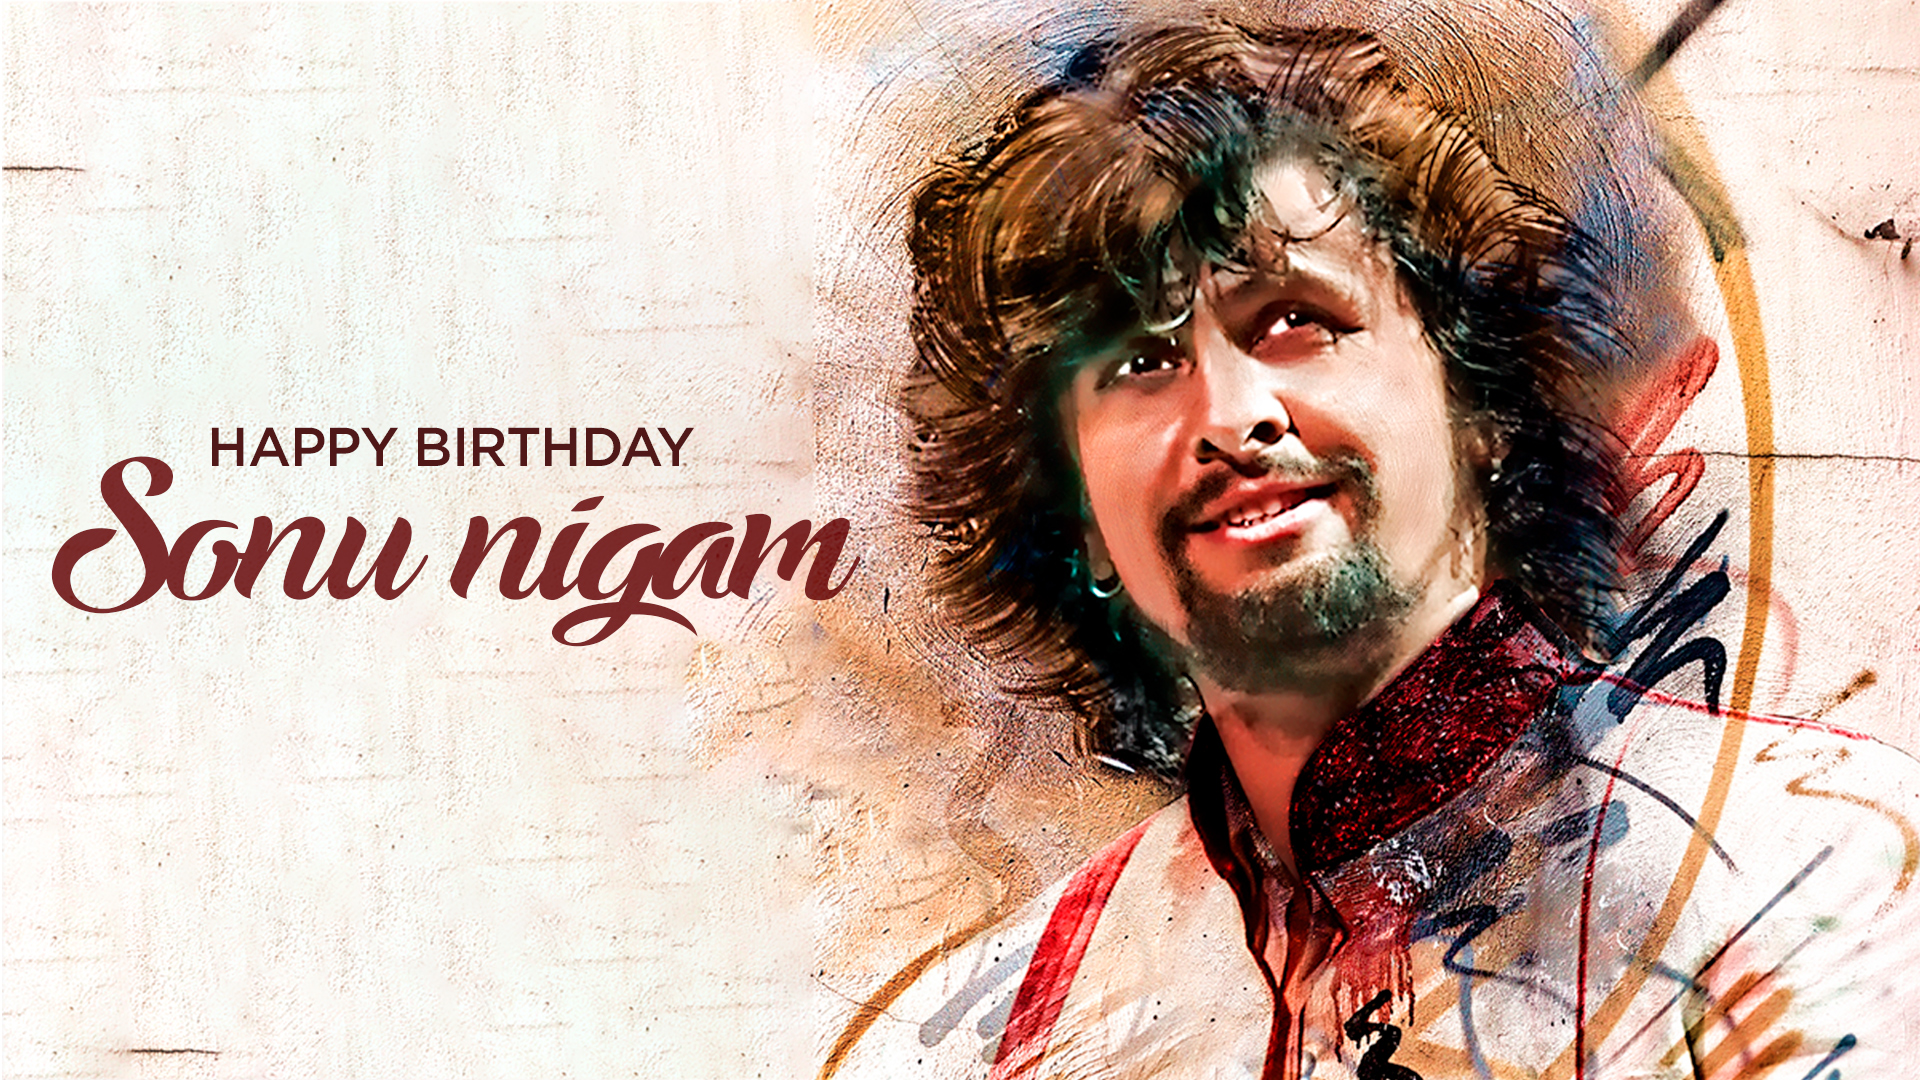 Happy Birthday Sonu Nigam - The Versatile Singer of Indian Cinema